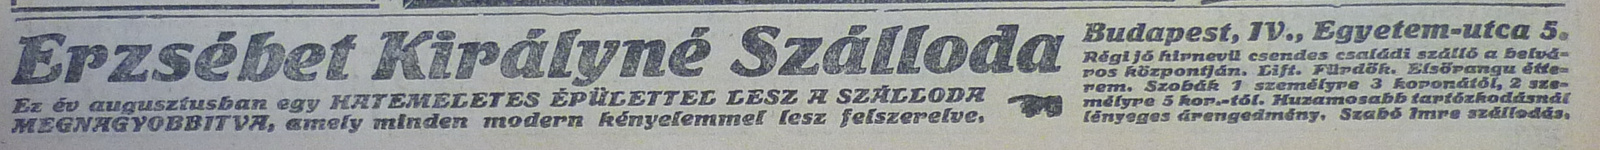 ErzsebetKiralyneSzalloda-1913Julius-AzEstHirdetes